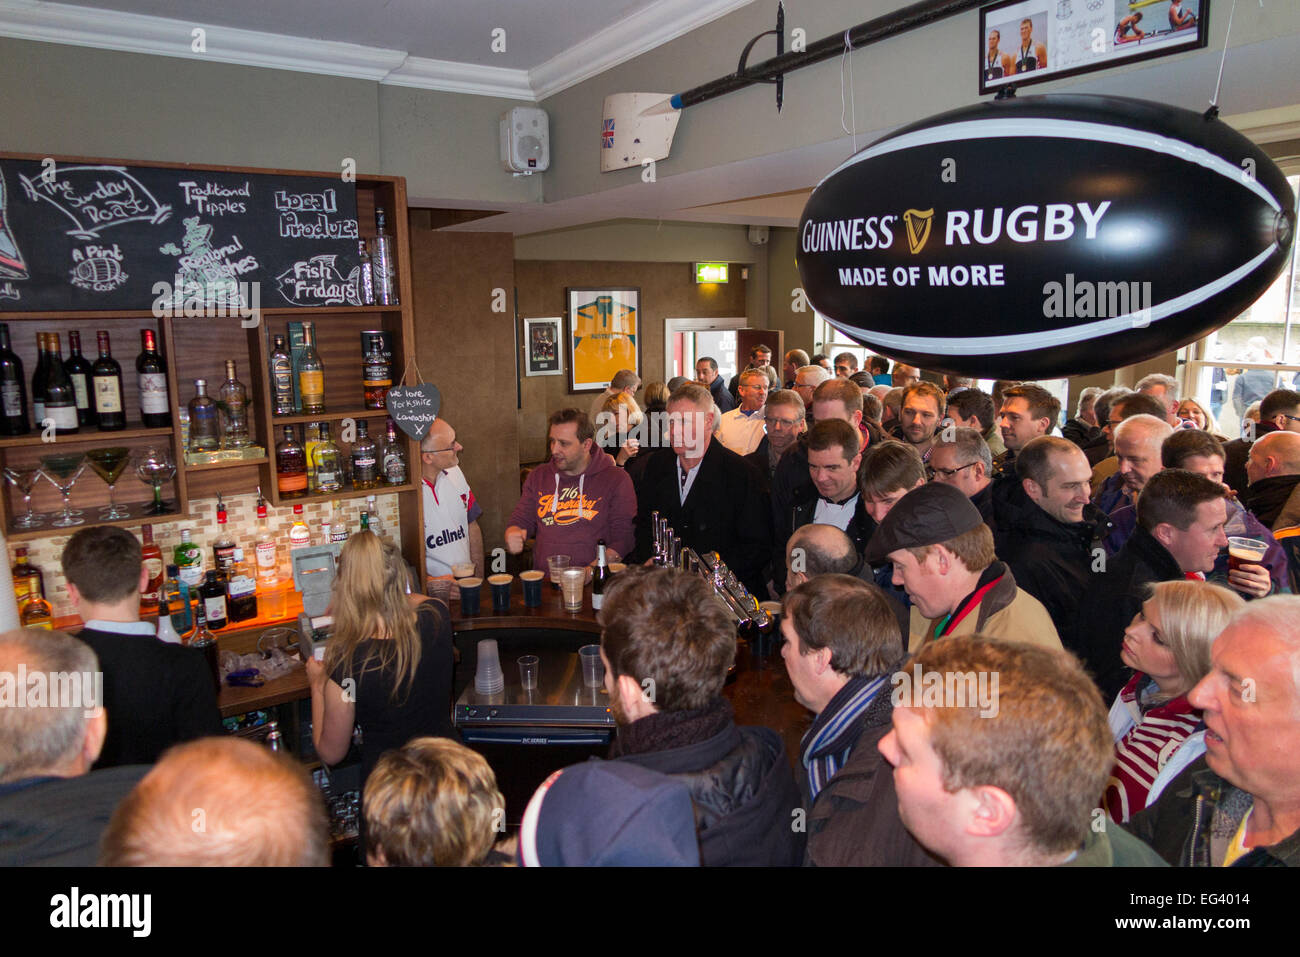 Rugby fan fans wait for barman man barmaid / staff at busy The Albany pub / public house. Twickenham UK; popular match days. Stock Photo